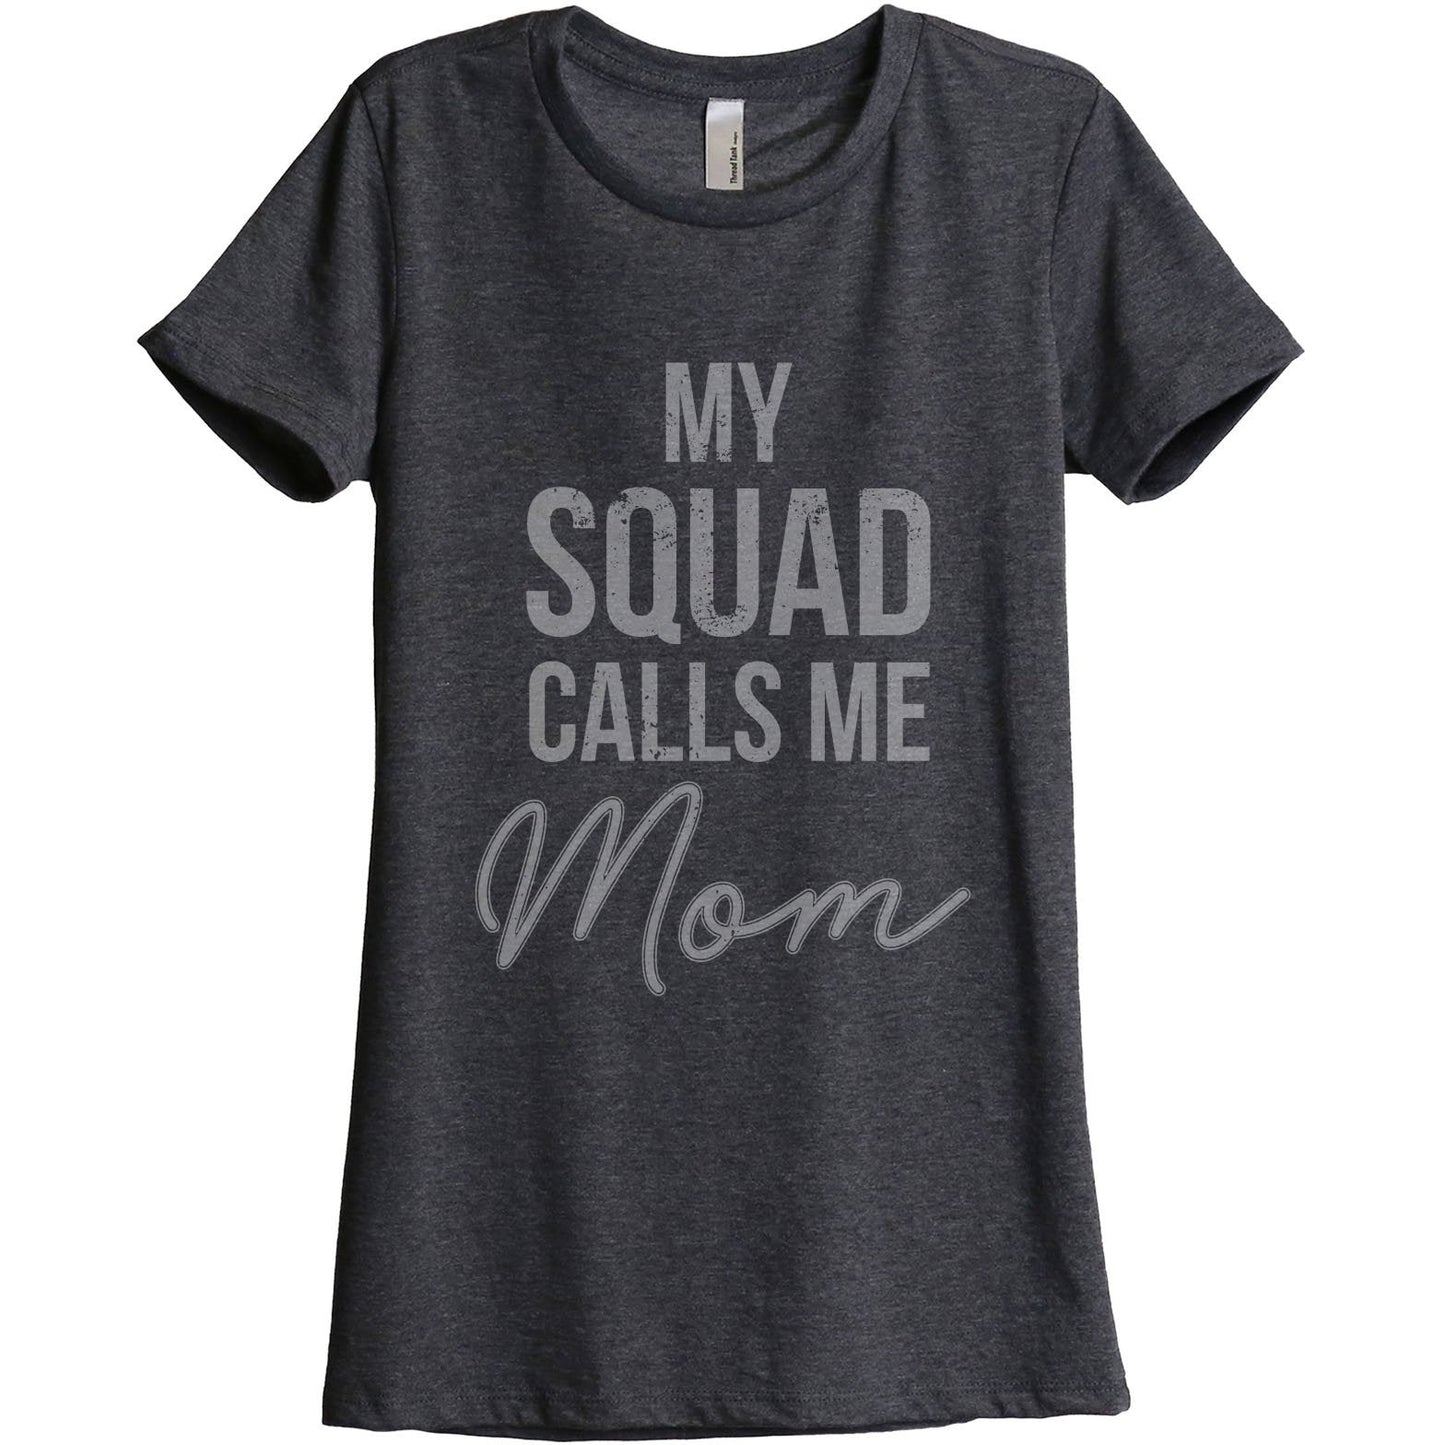 My Squad Calls Me Mom